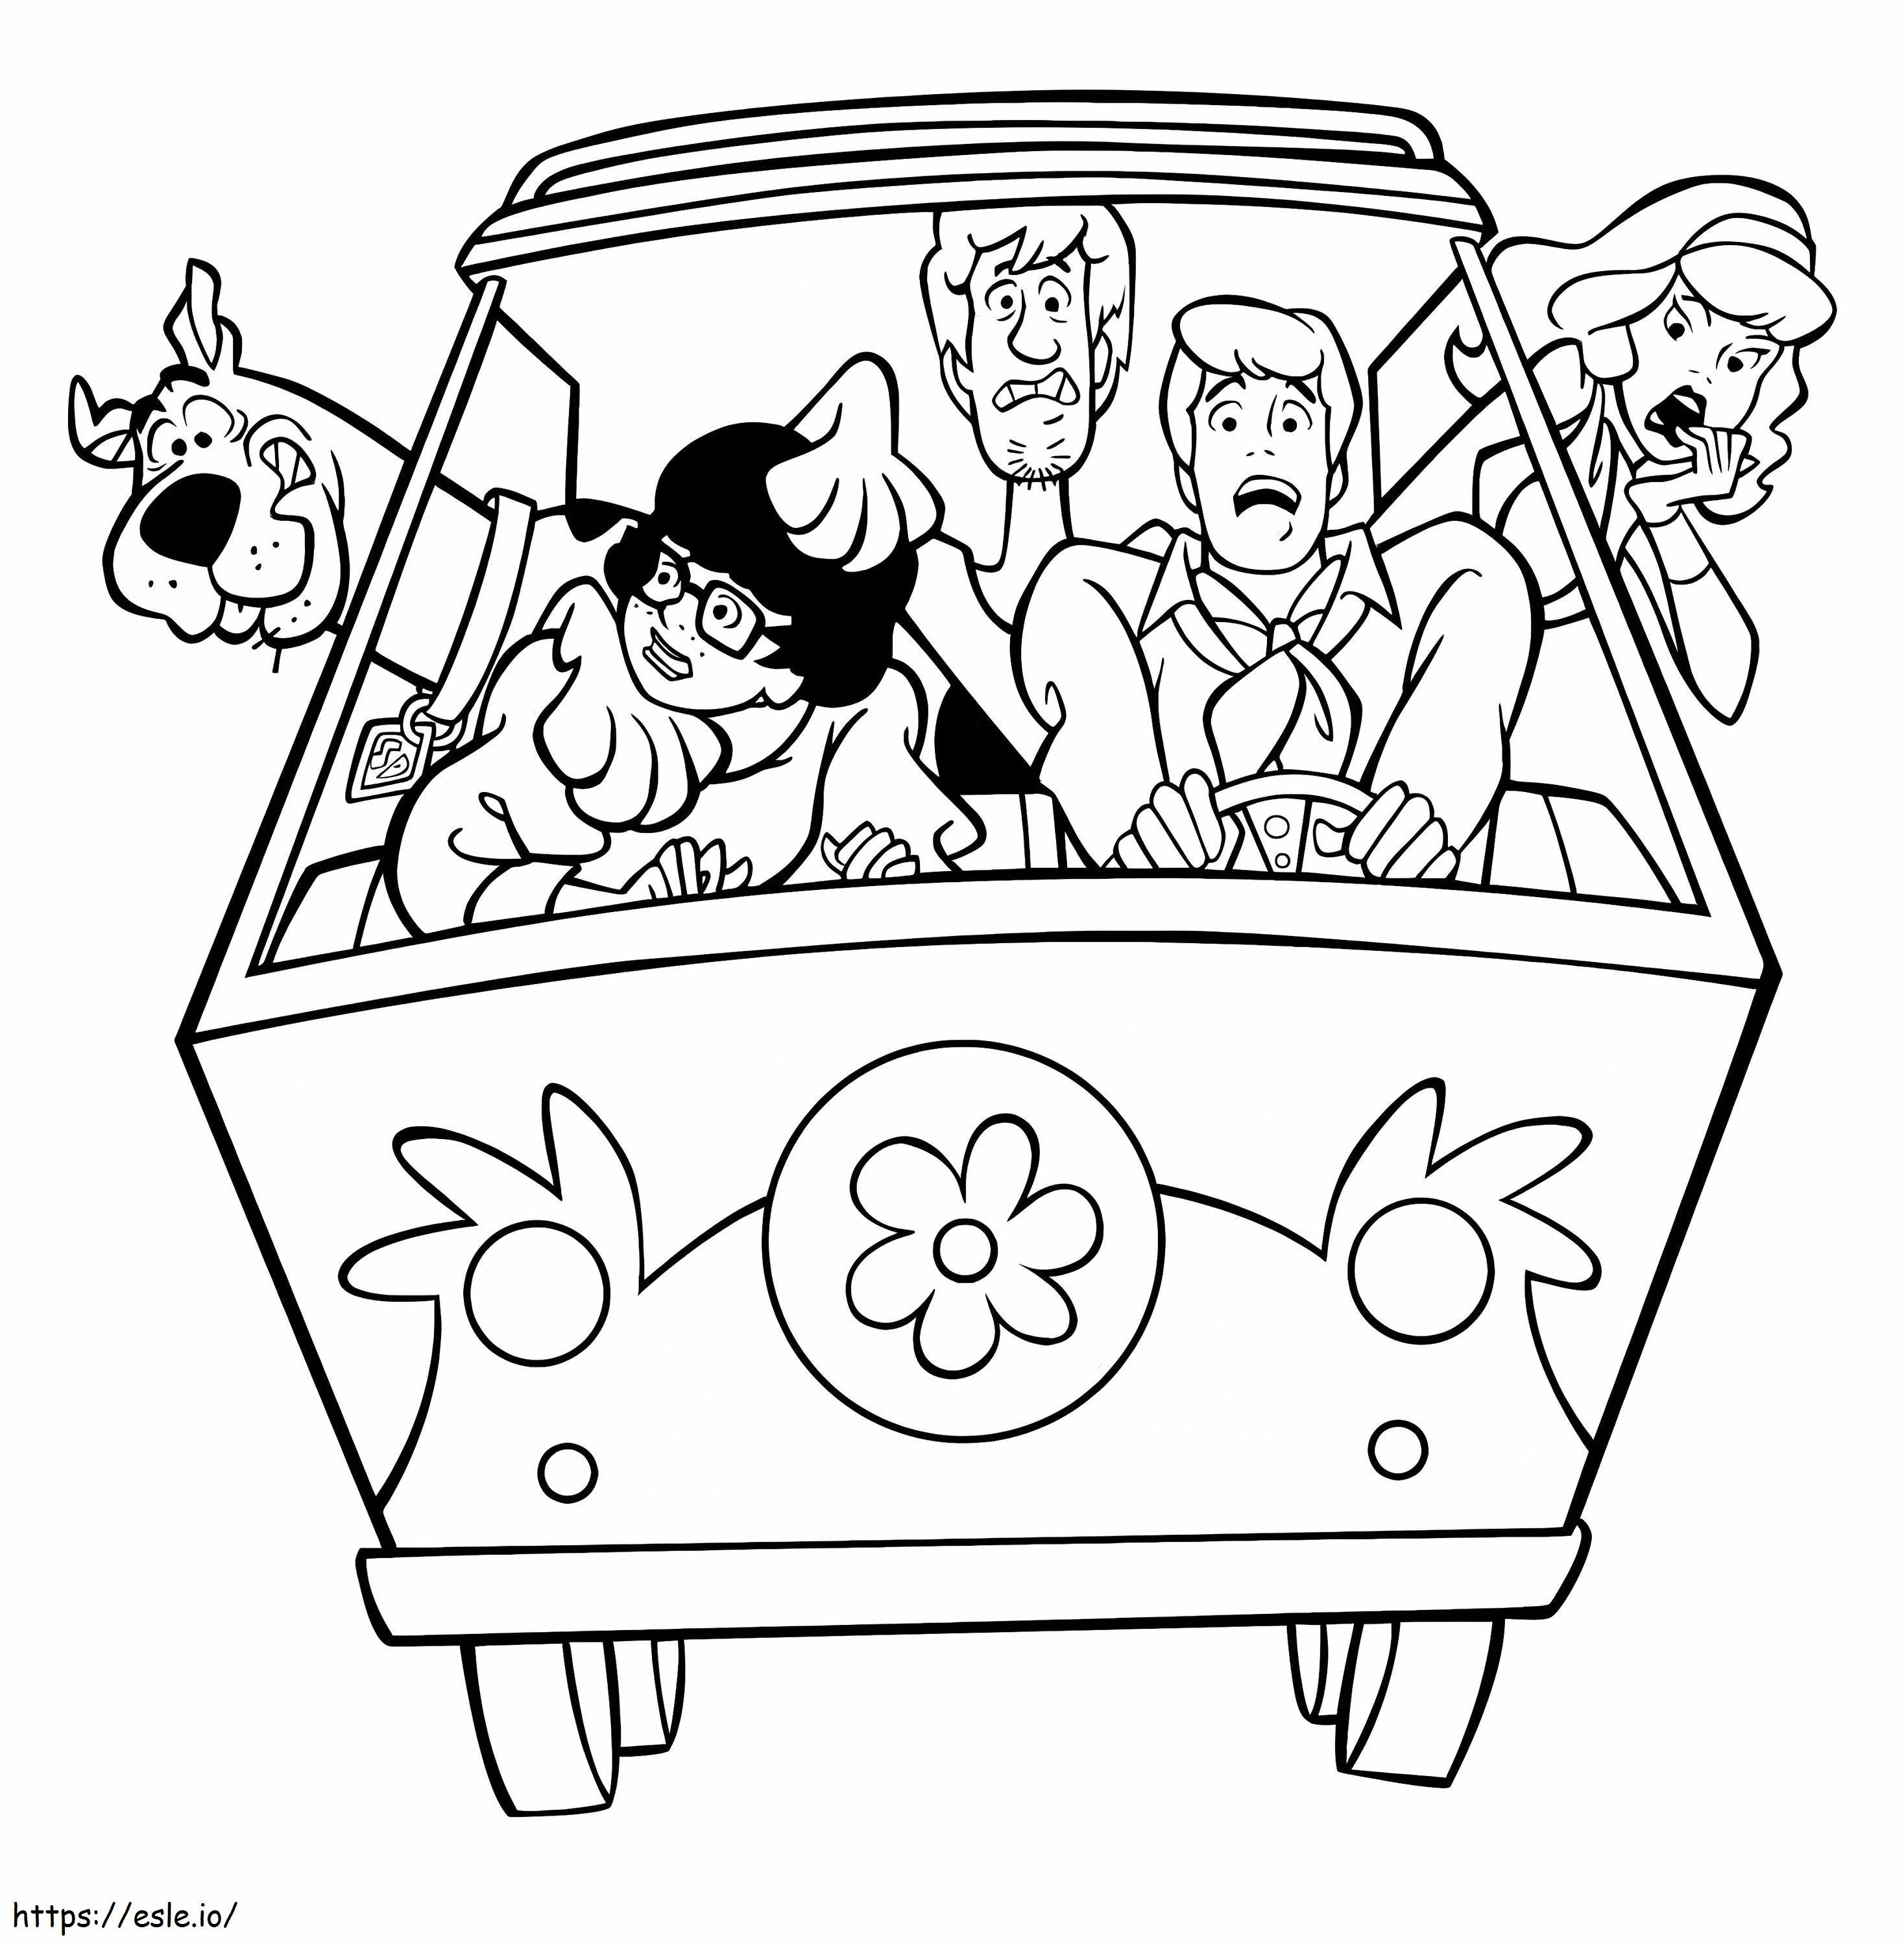 Coloriage Shaggy et Scooby Doo effrayés à imprimer dessin